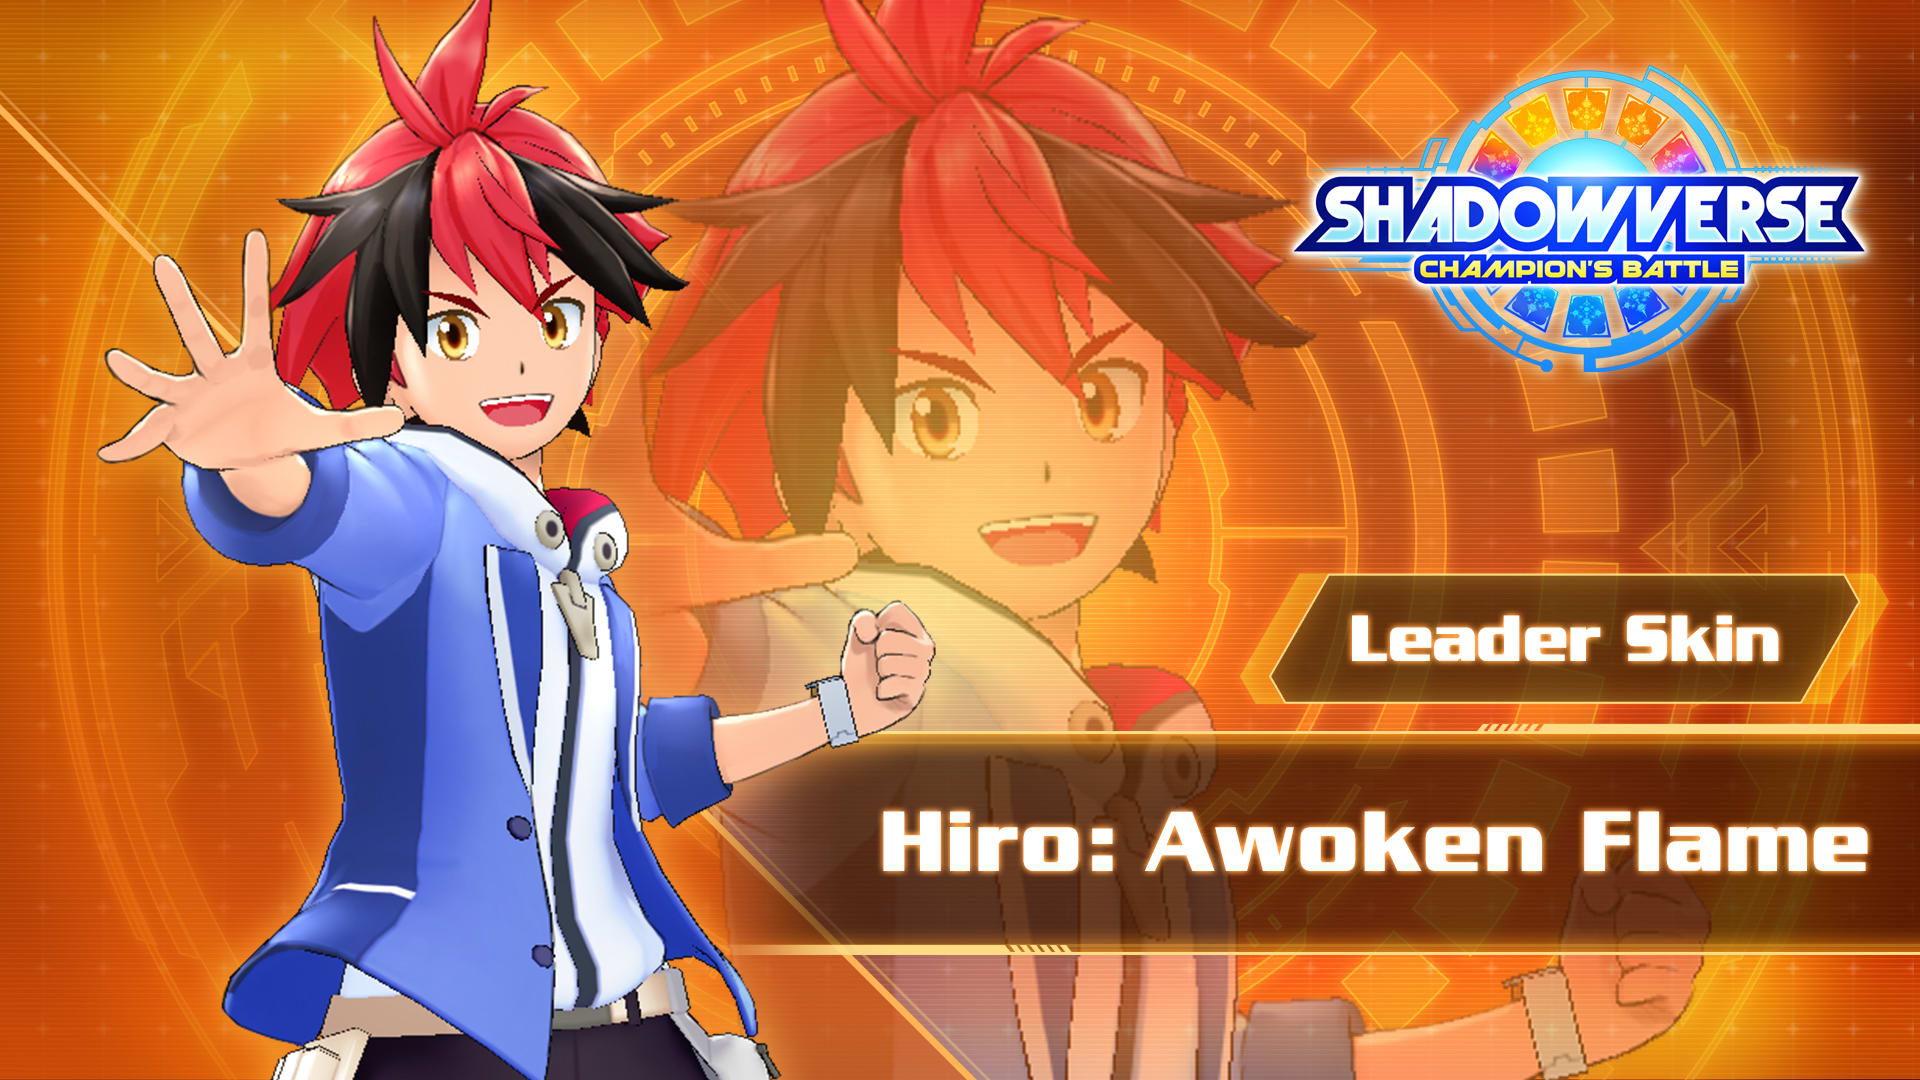 Leader Skin: "Hiro: Awoken Flame"